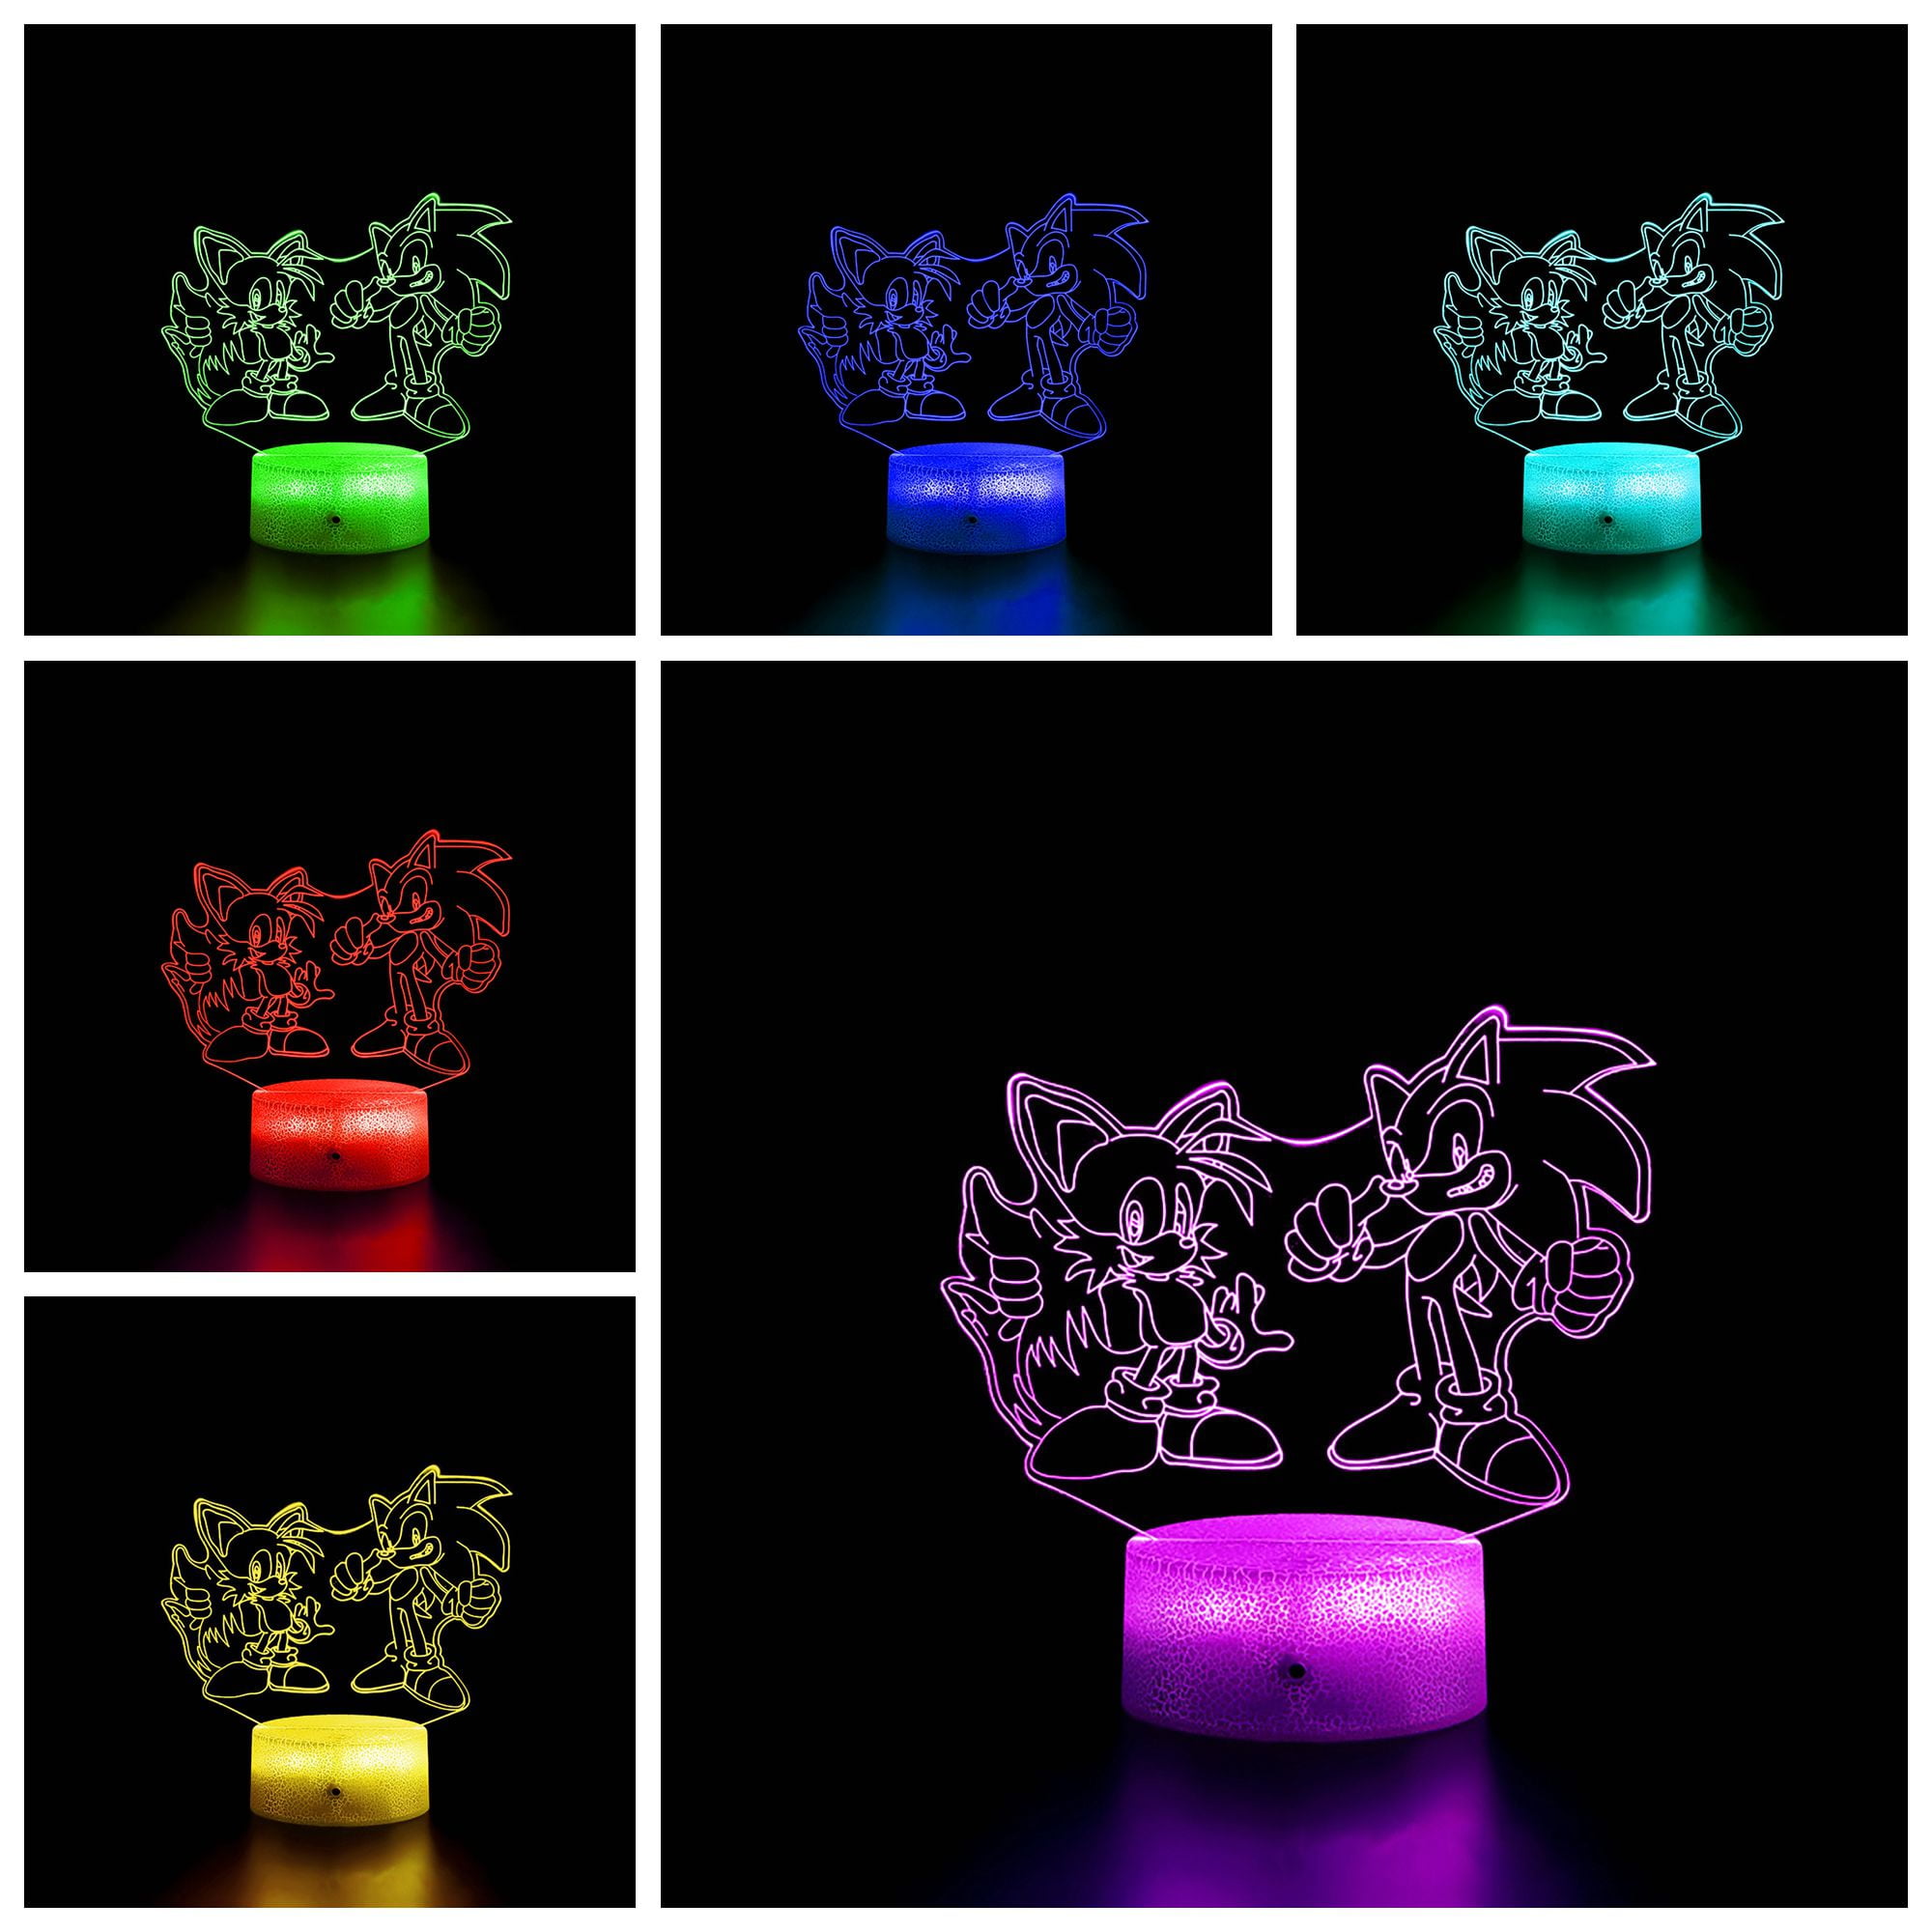 DUKES OF HAZZARD GENERAL LEE 3D LED BATTERY USB NIGHT LIGHT 7 COLOUR'S REMOTE 